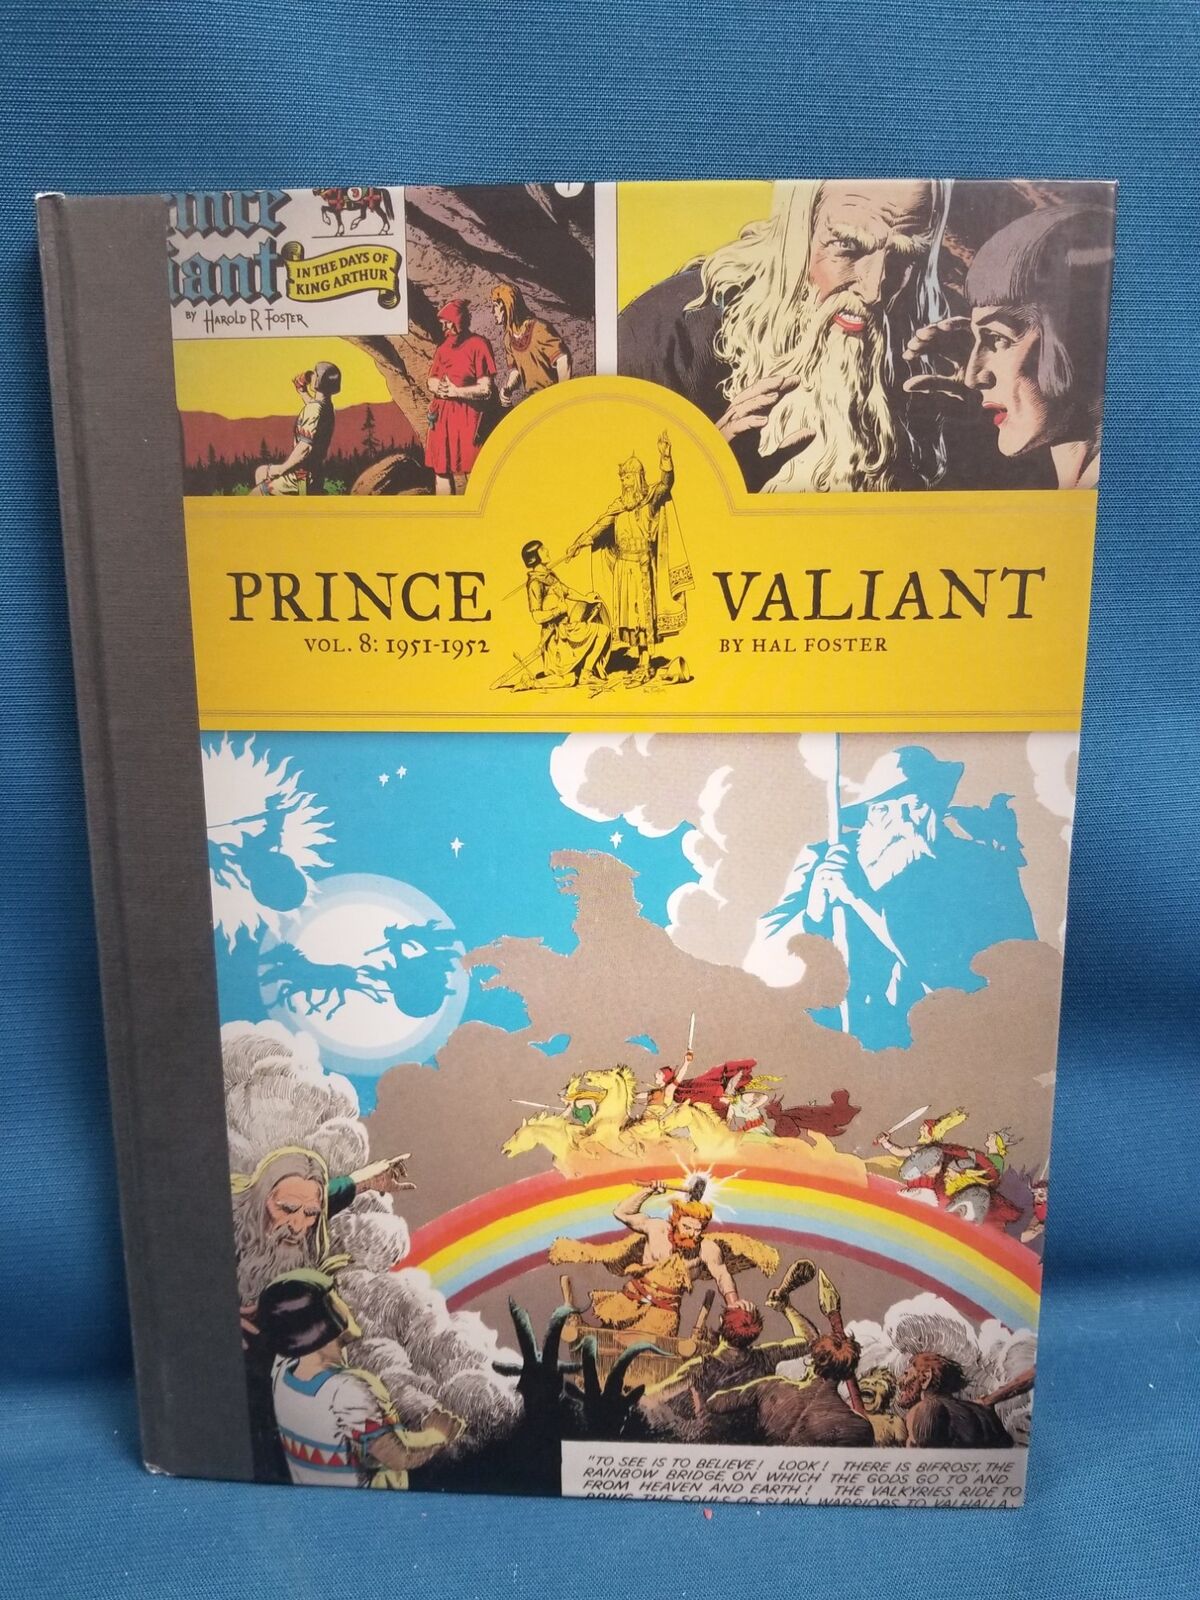 Prince Valiant Vol. 8 1951-1952 (2014) Hal Foster Fantagraphics Hardcover